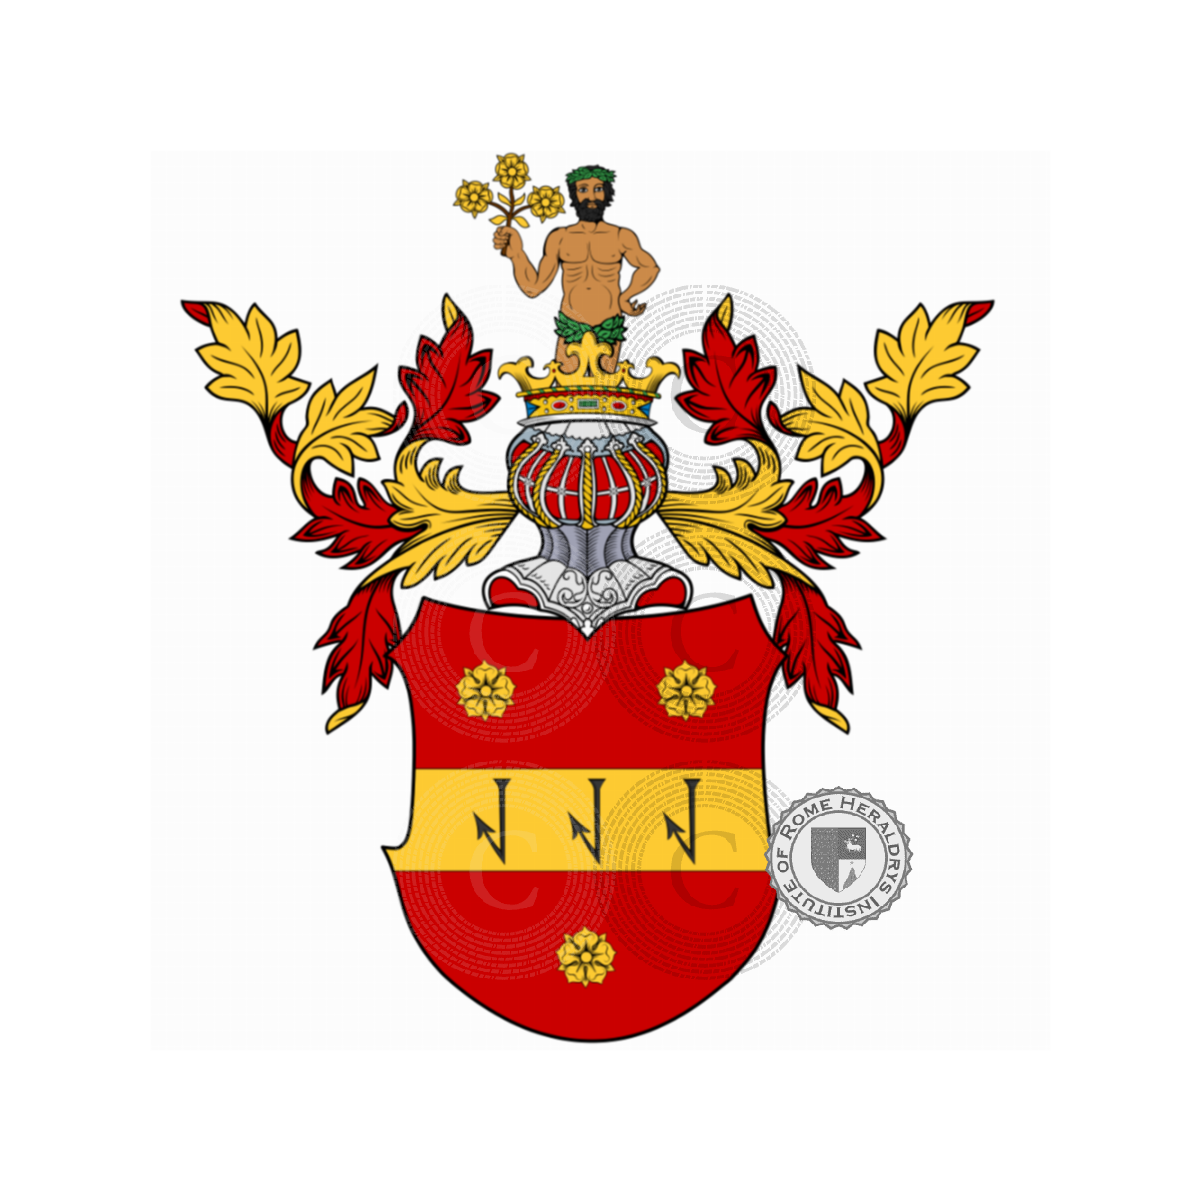 Escudo de la familiaReissen, Reissen,Reissenzahn